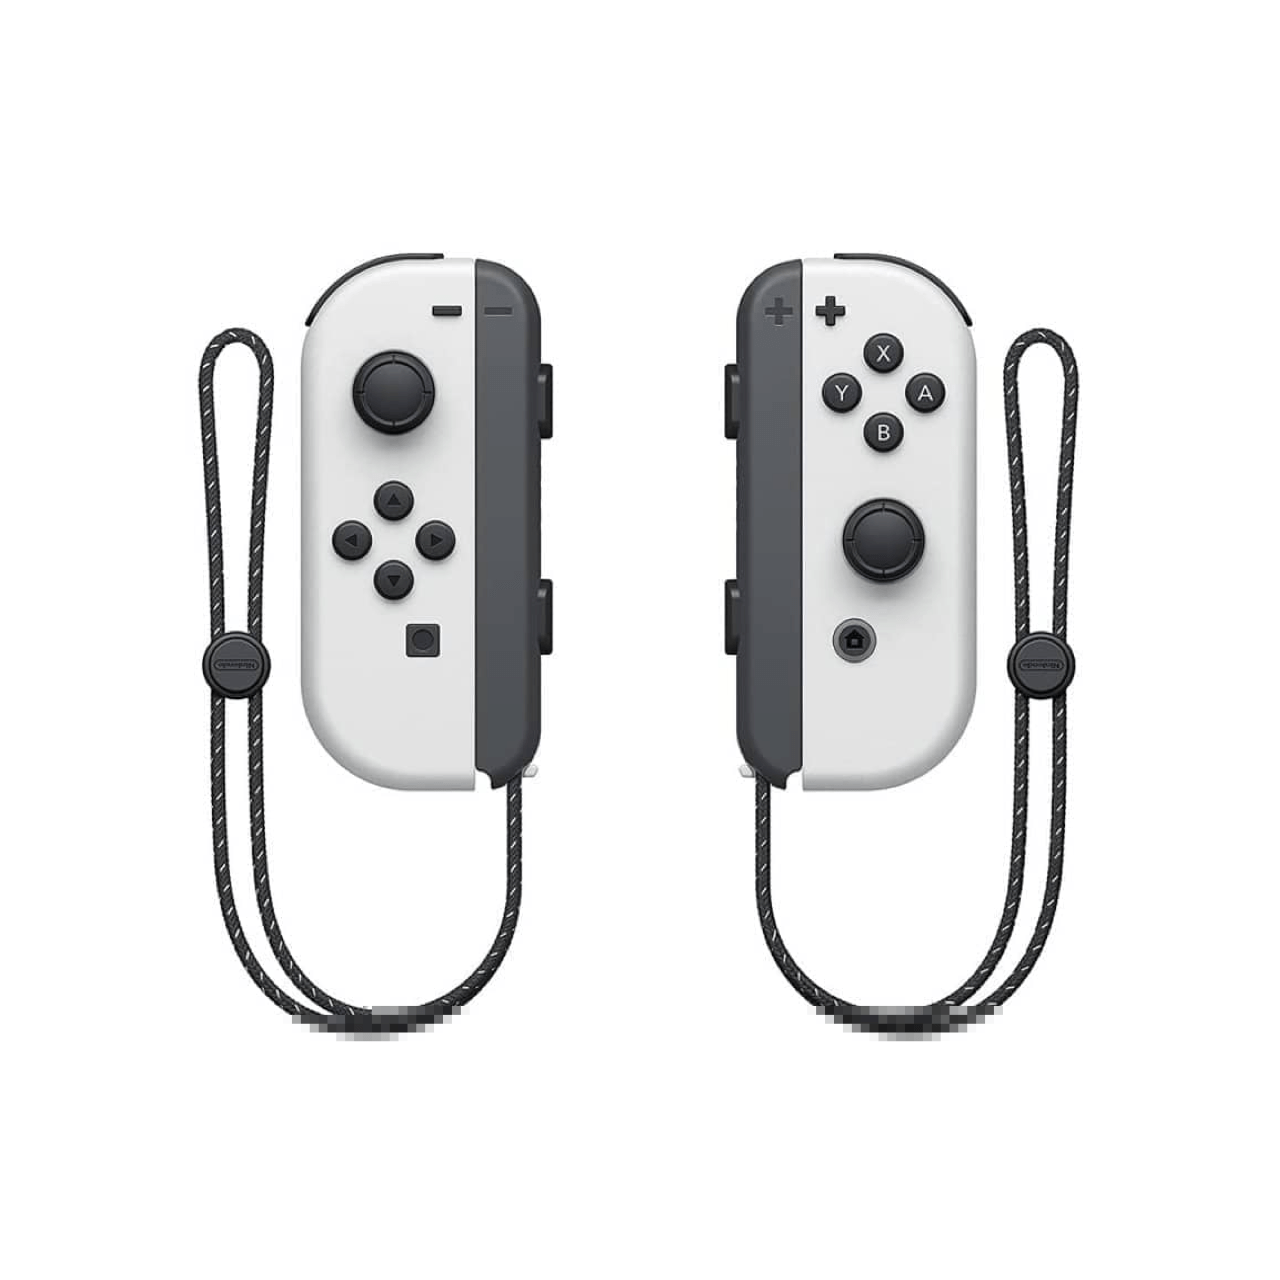 Nintendo Switch Console (OLED Model)